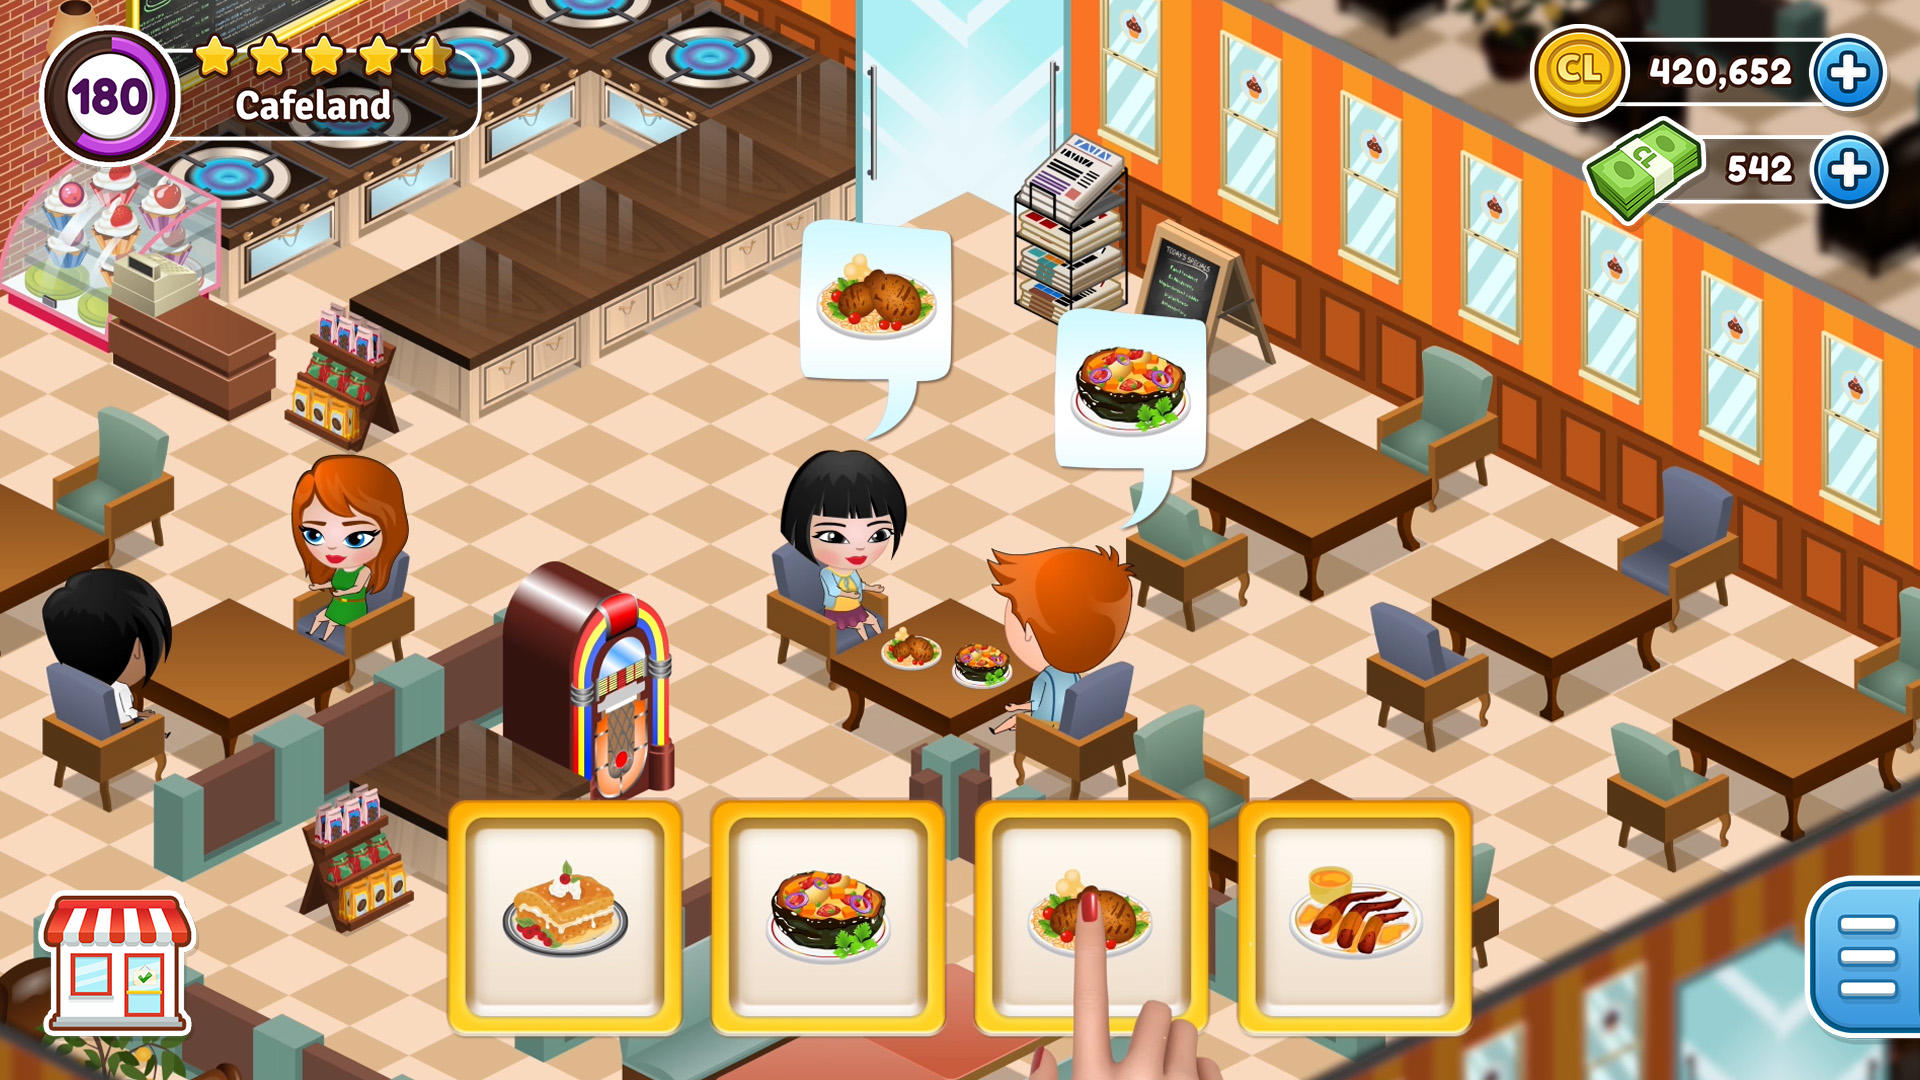 Screenshot 1 of Cafeland - Memasak Restoran 2.22.5